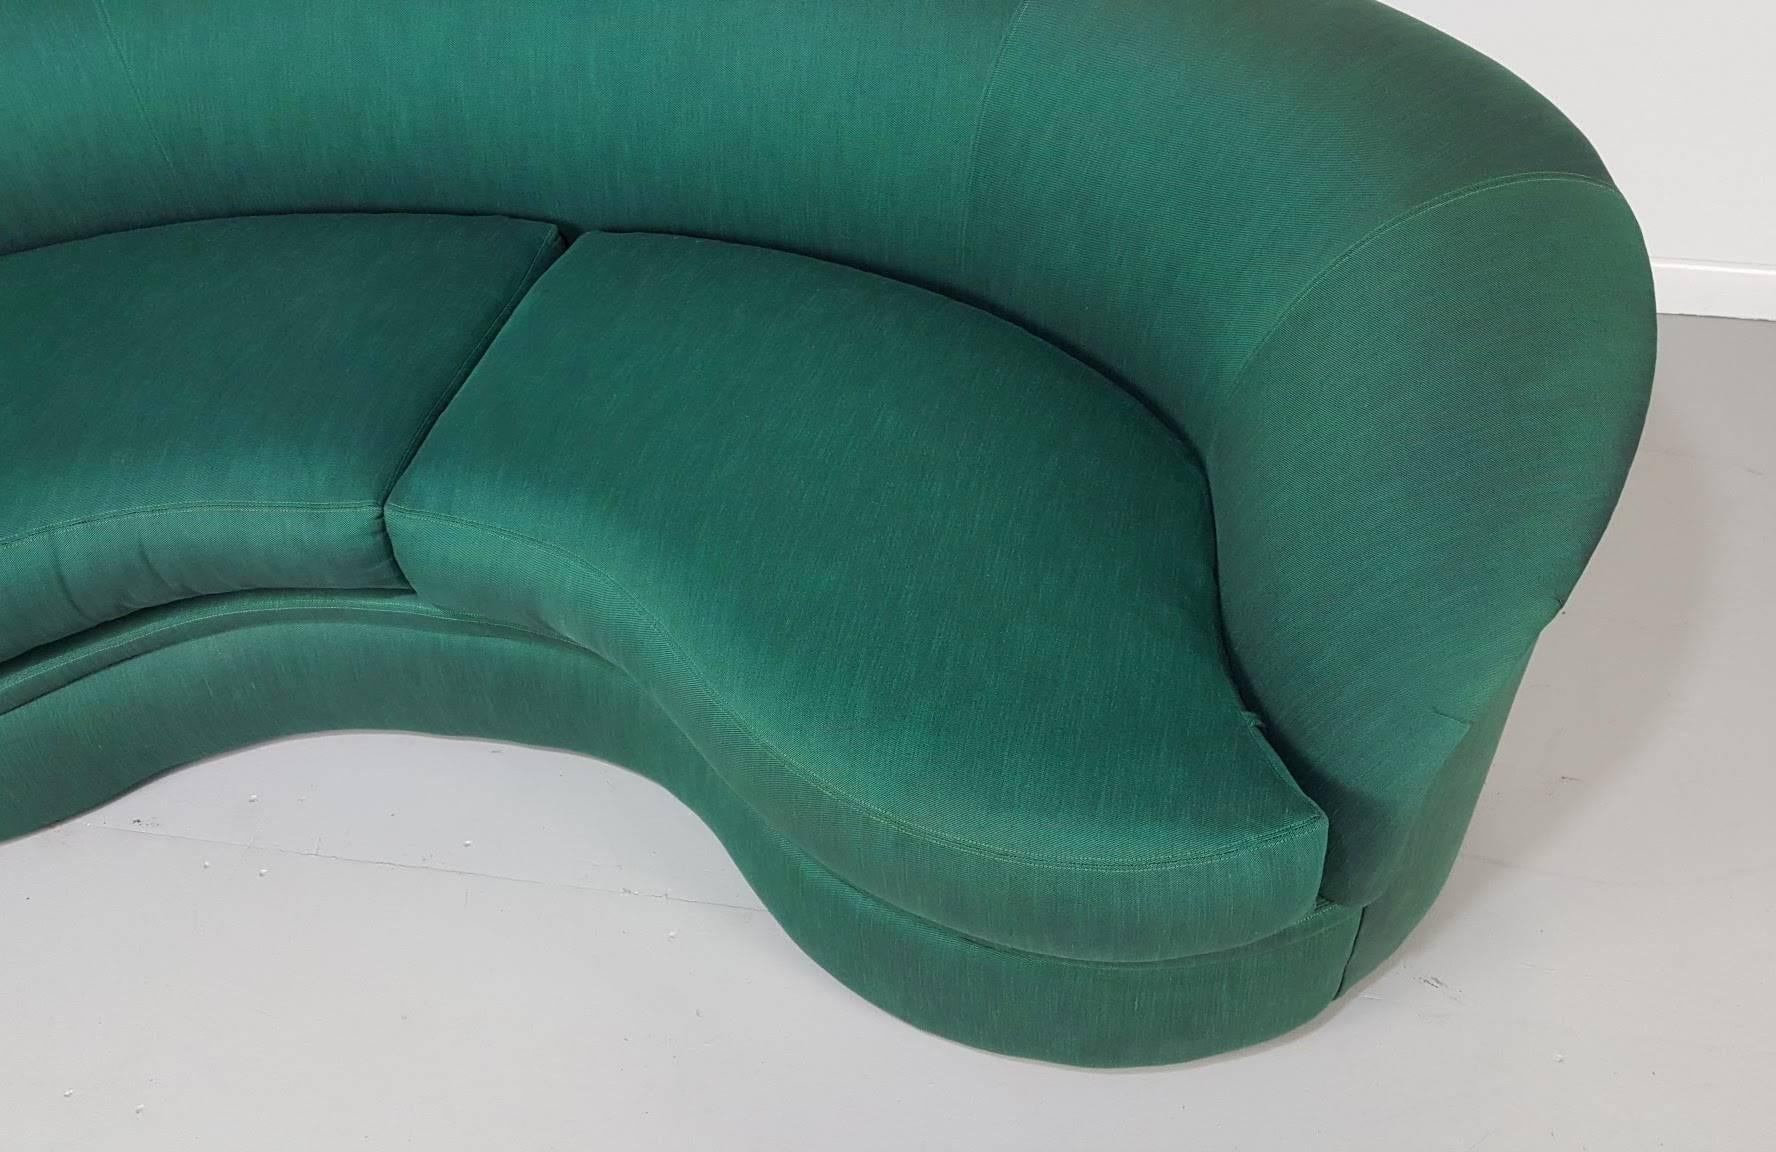 Late 20th Century Vladimir Kagan Sofa, Biomorphic Kidney Form for Directional Furniture, 1980s